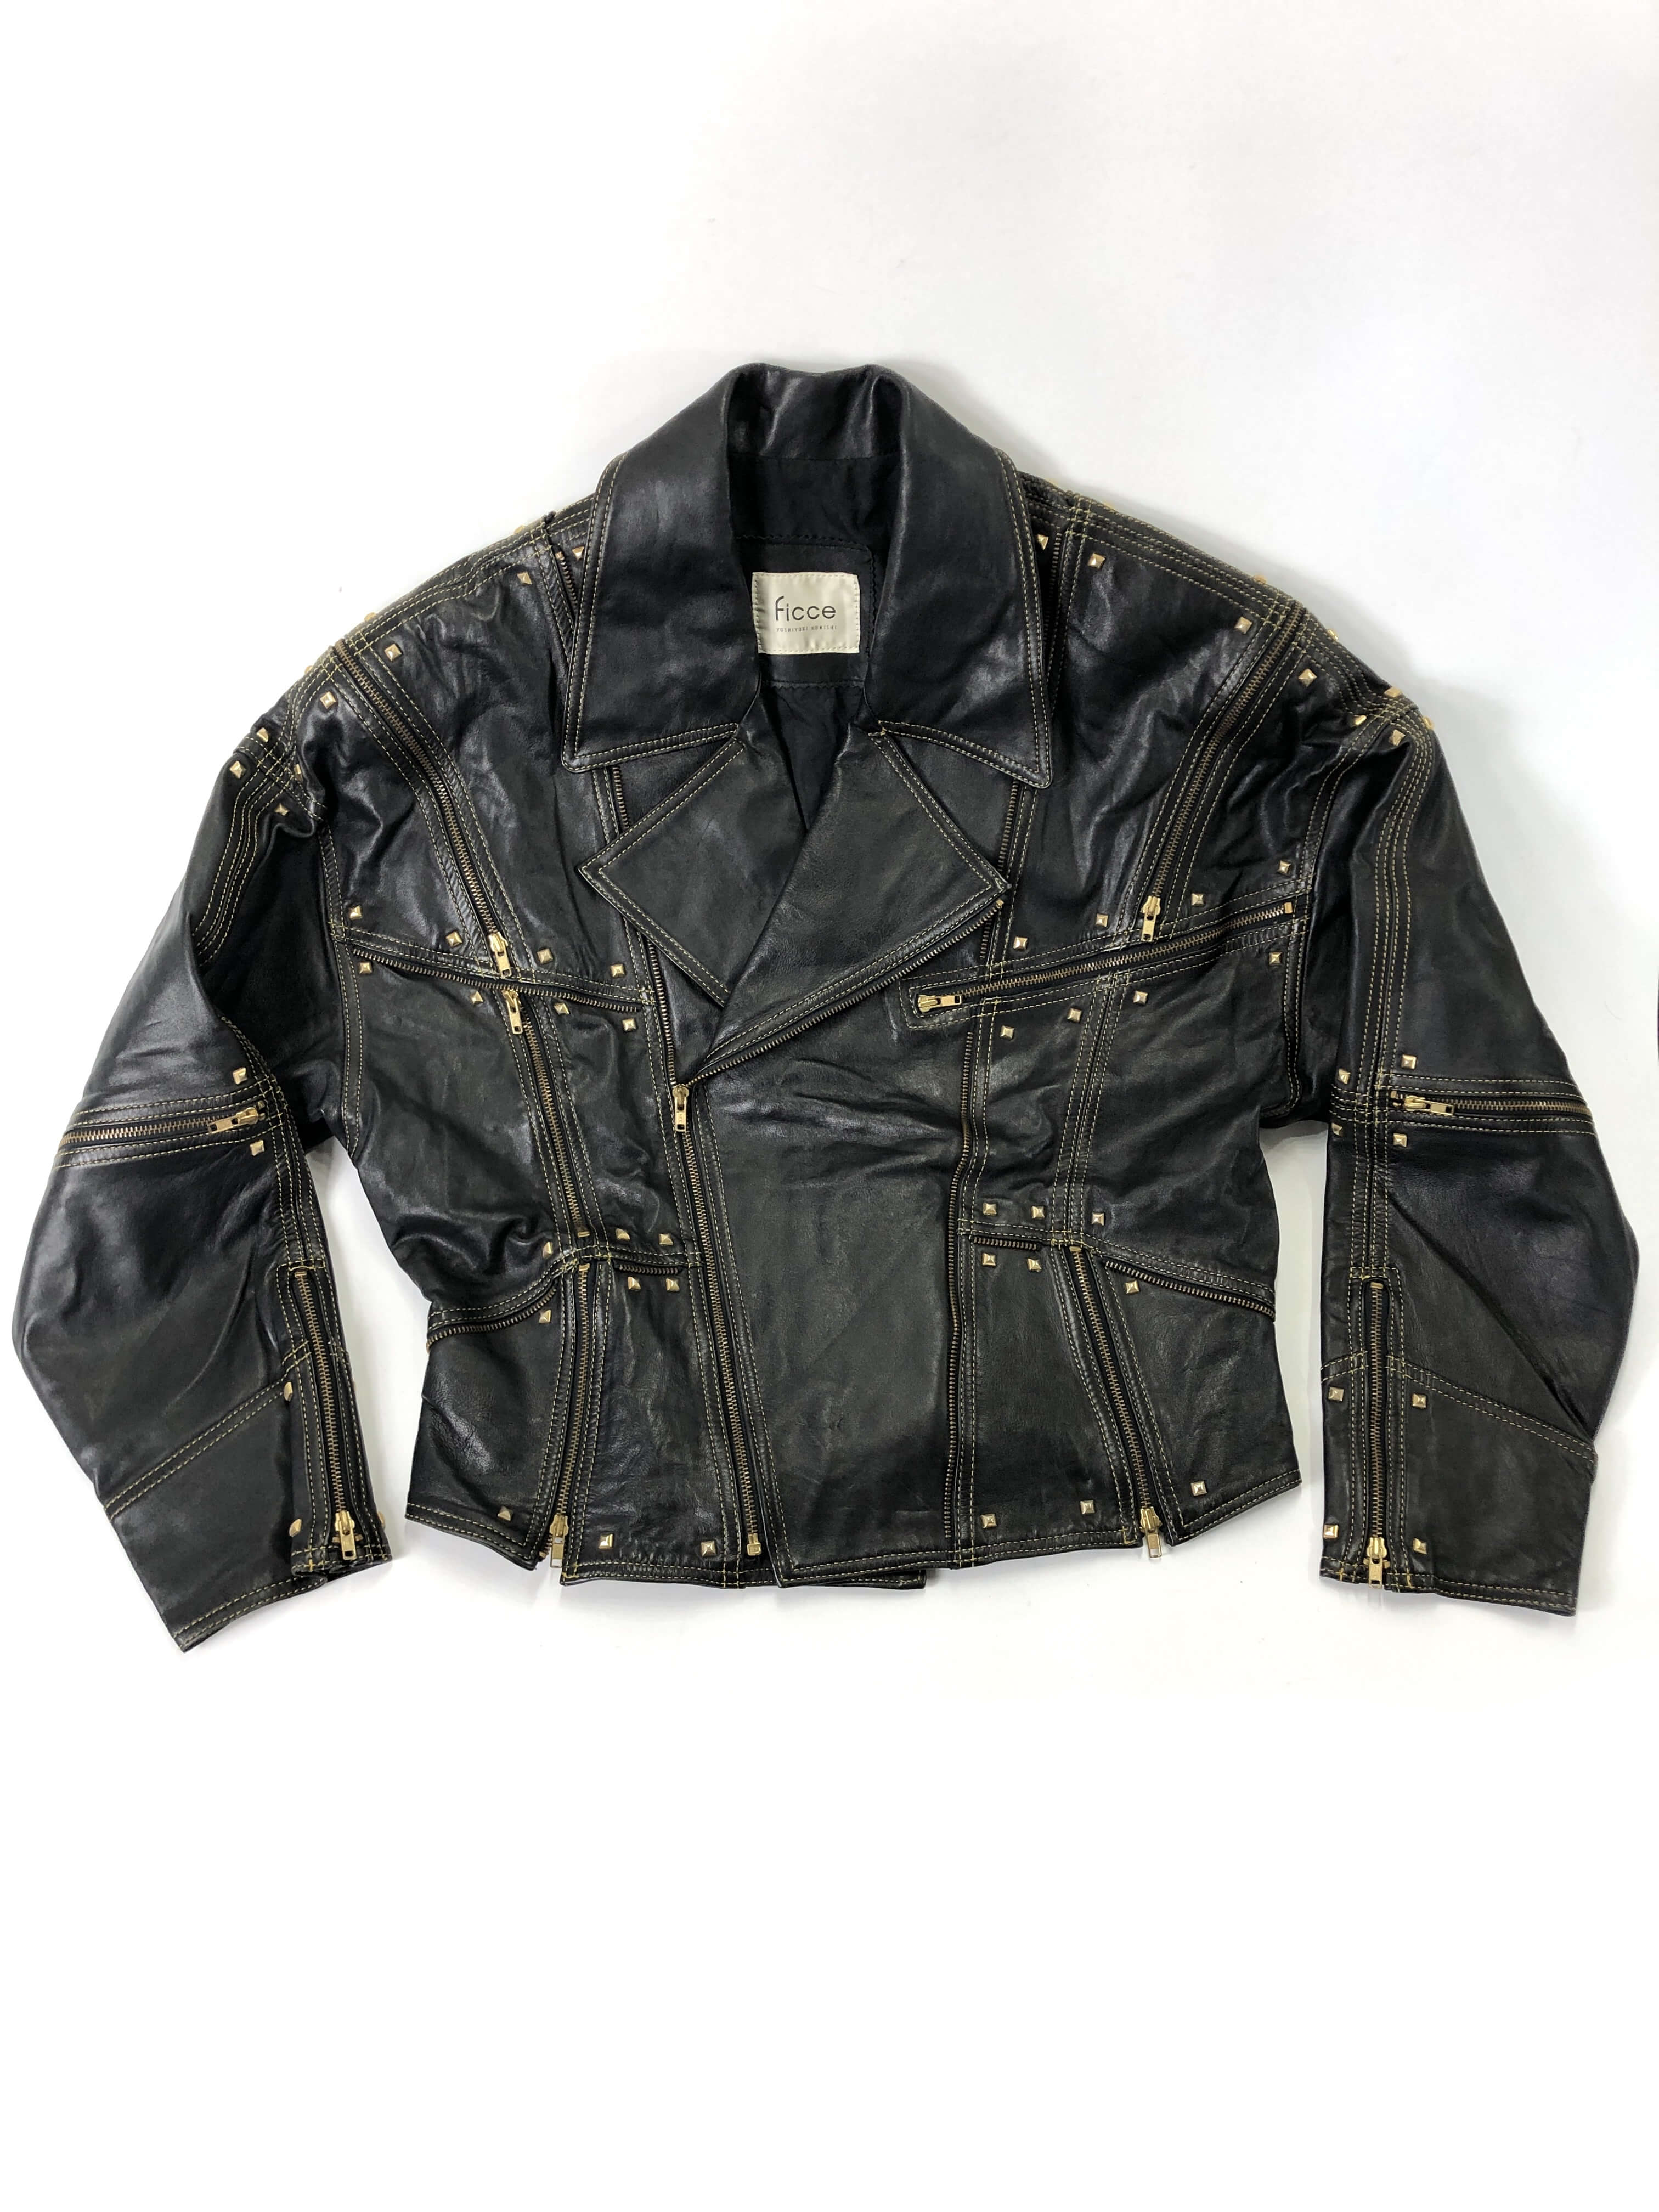 ficce leather jacket